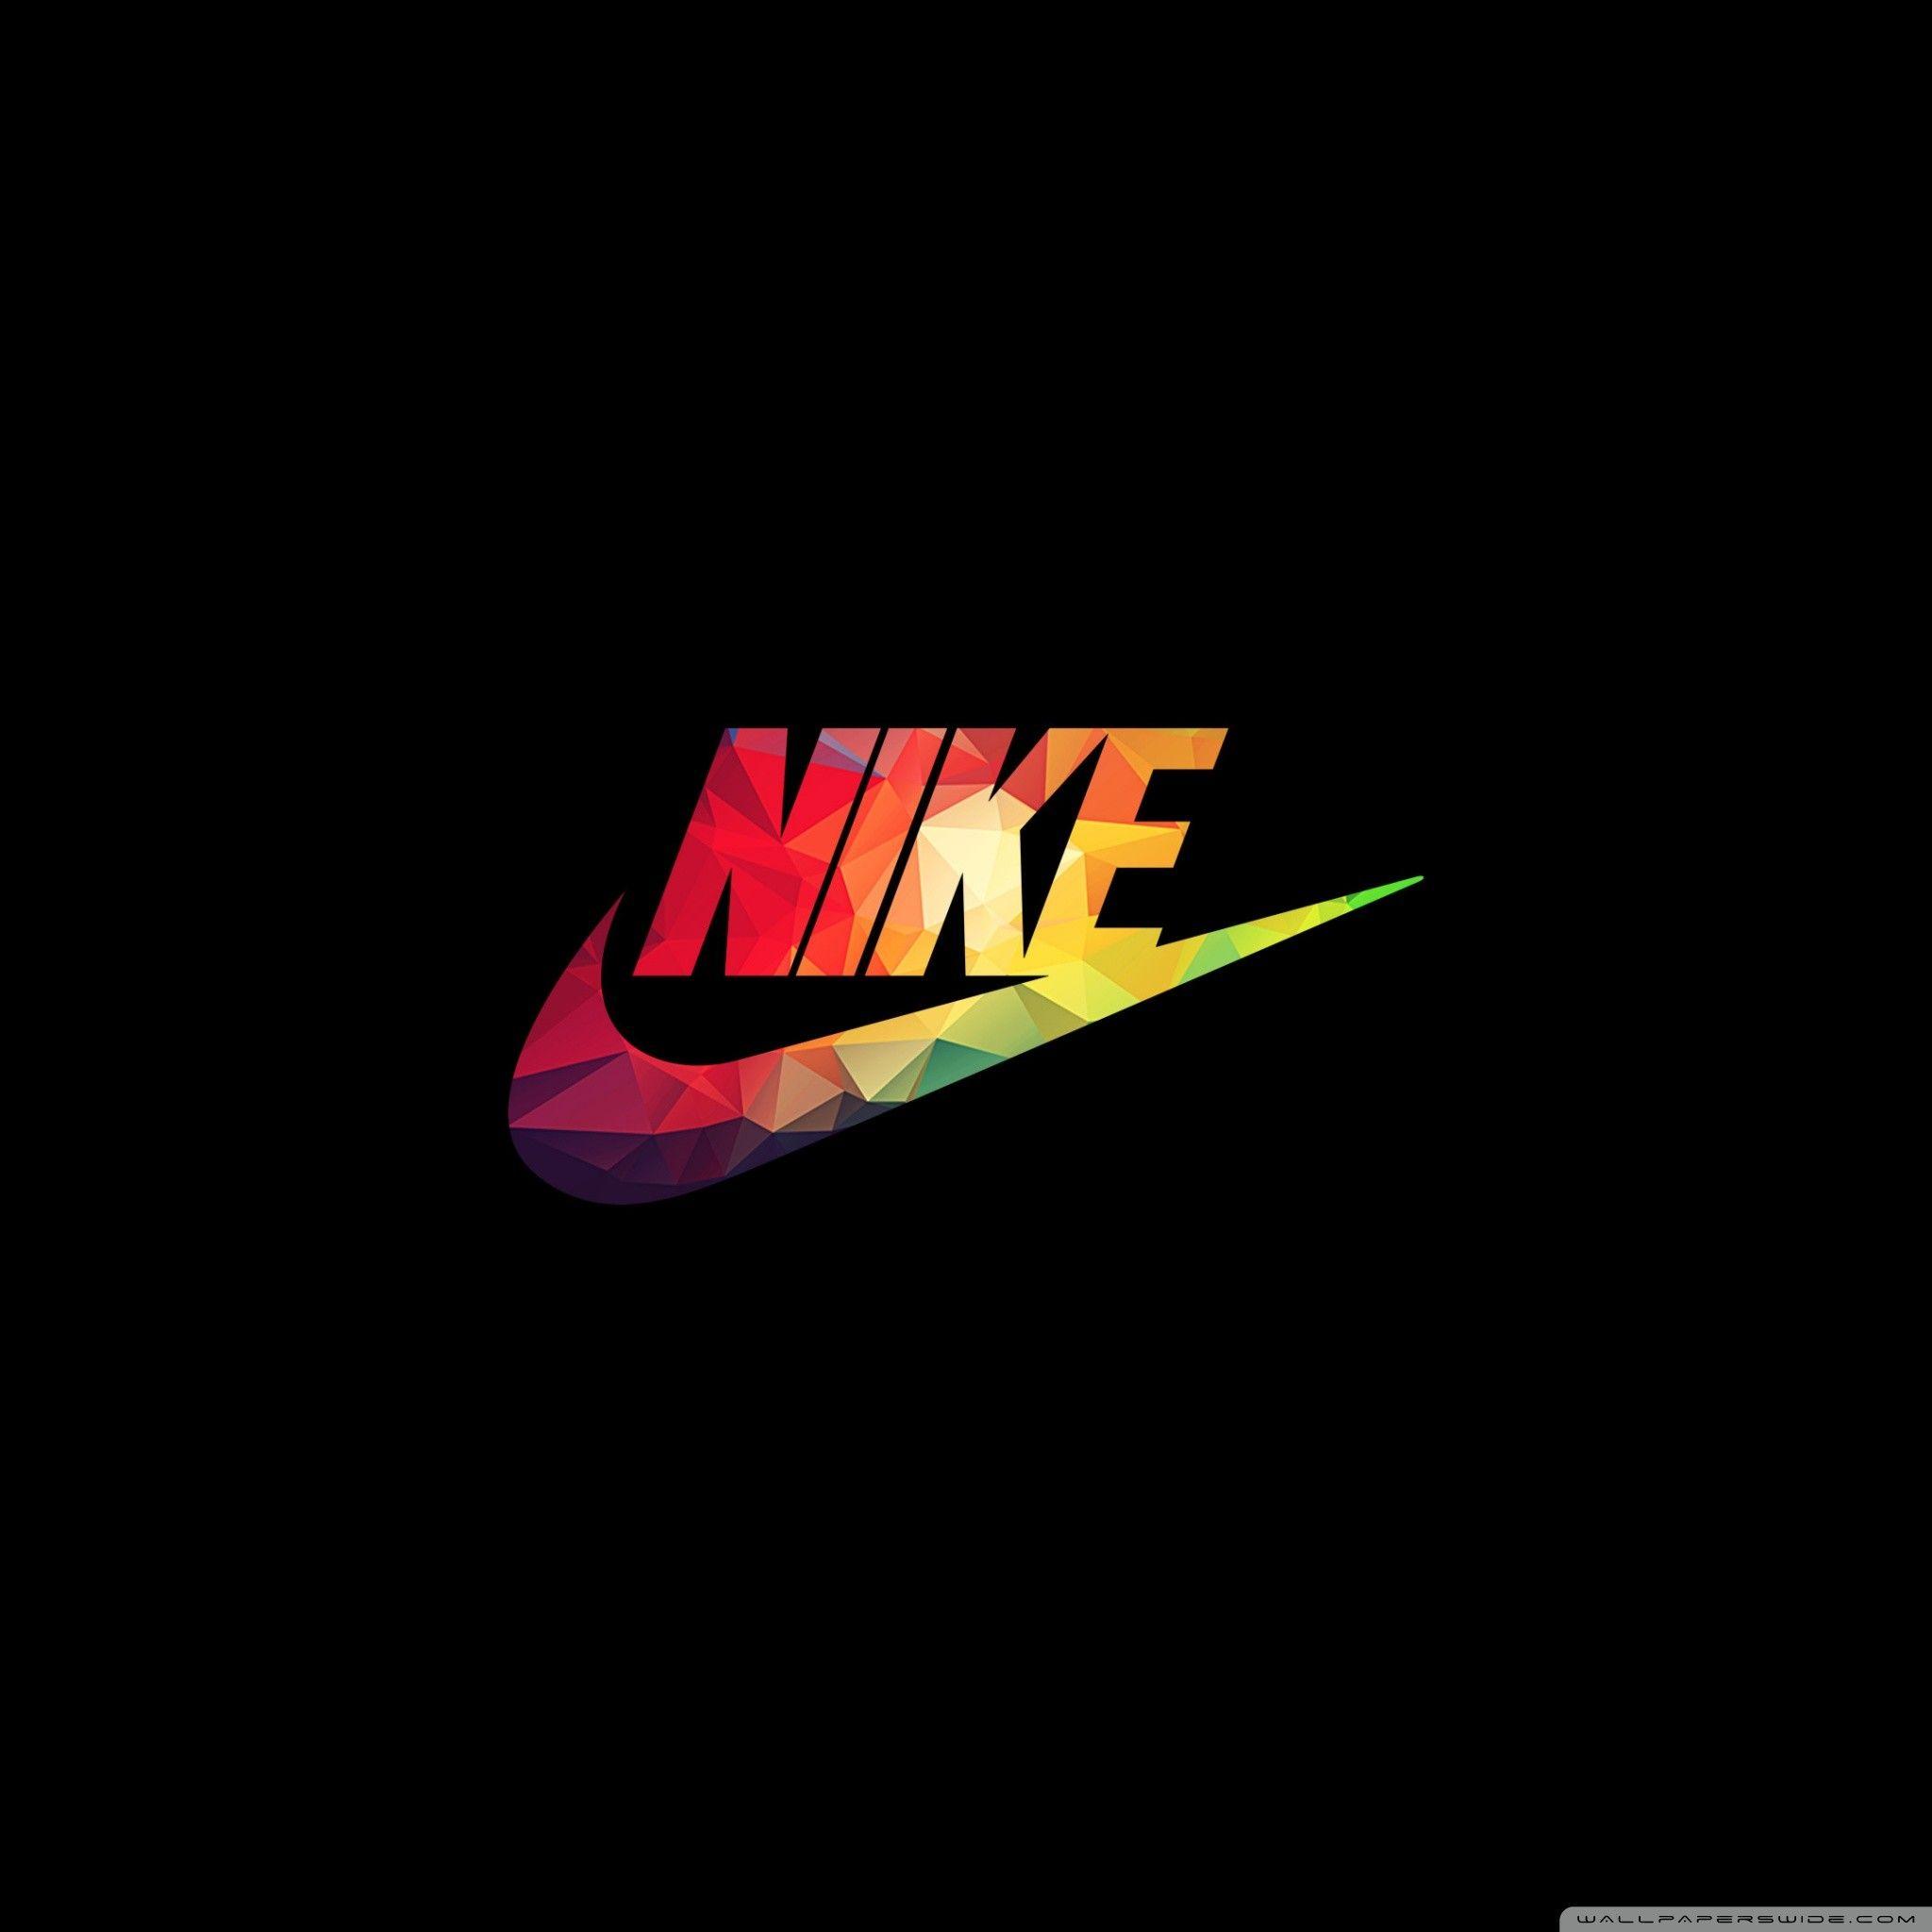 Nike Wallpaper